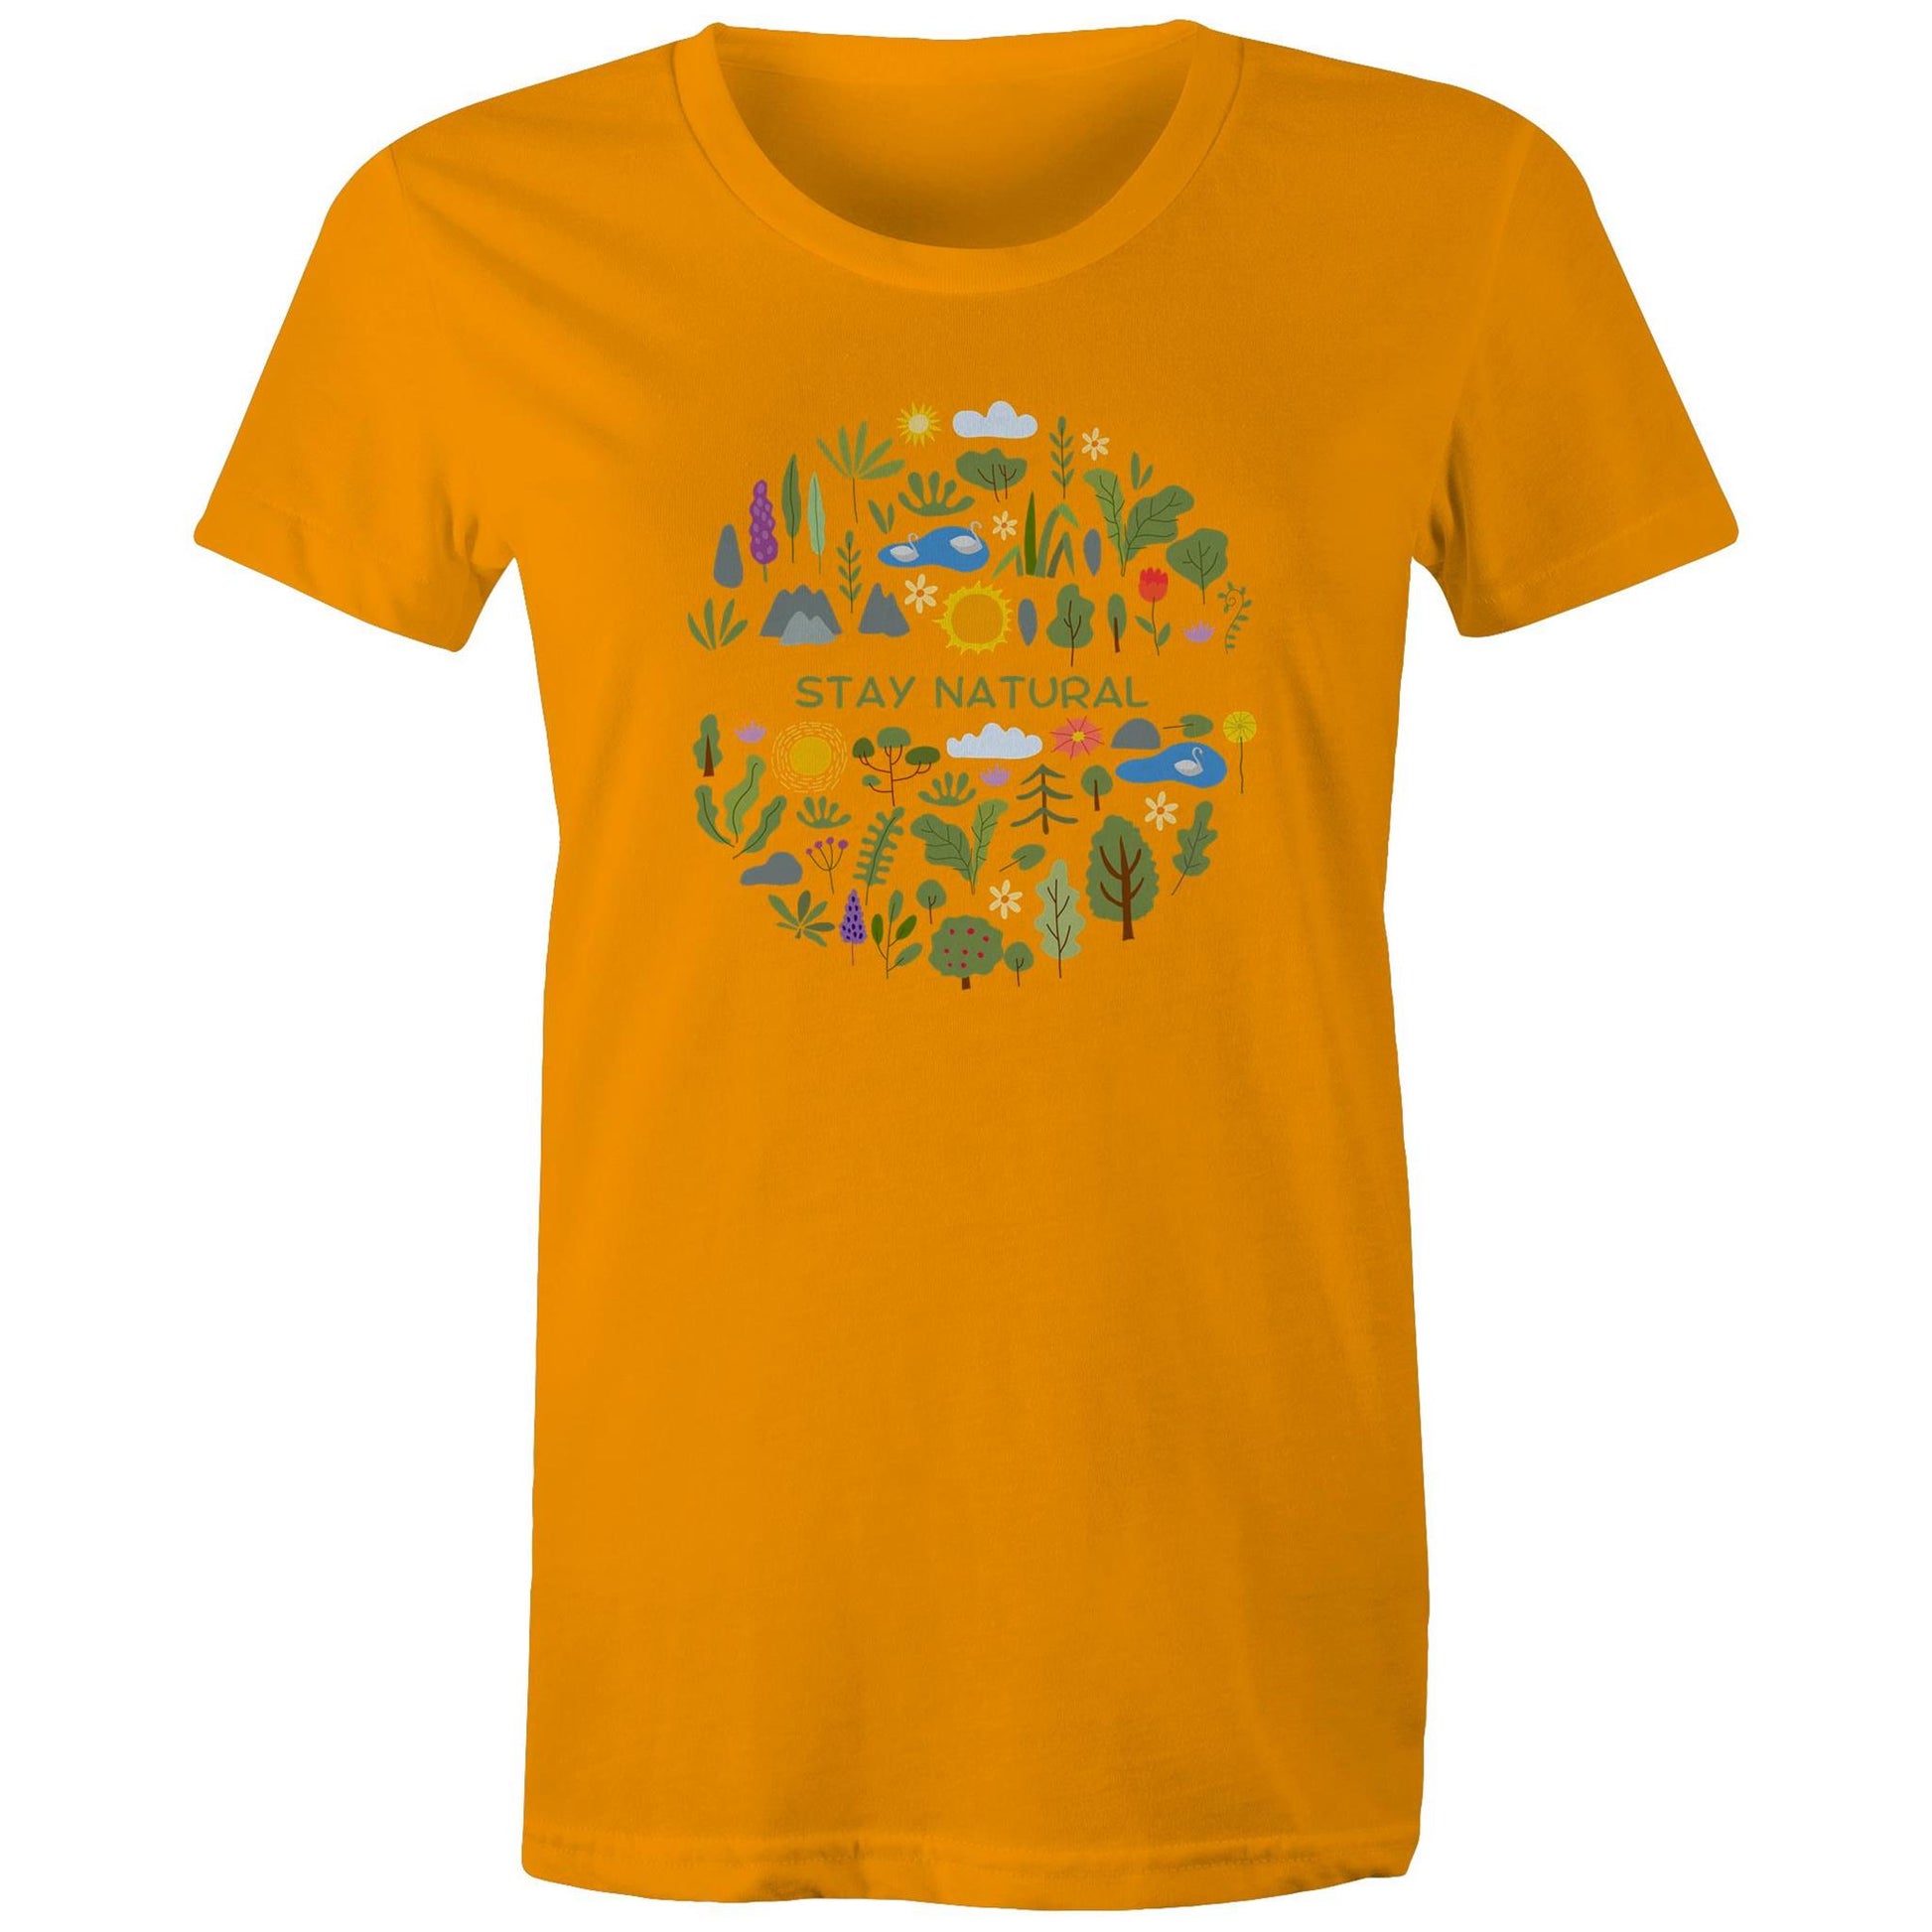 Stay Natural - Womens T-shirt Orange Womens T-shirt Environment Plants